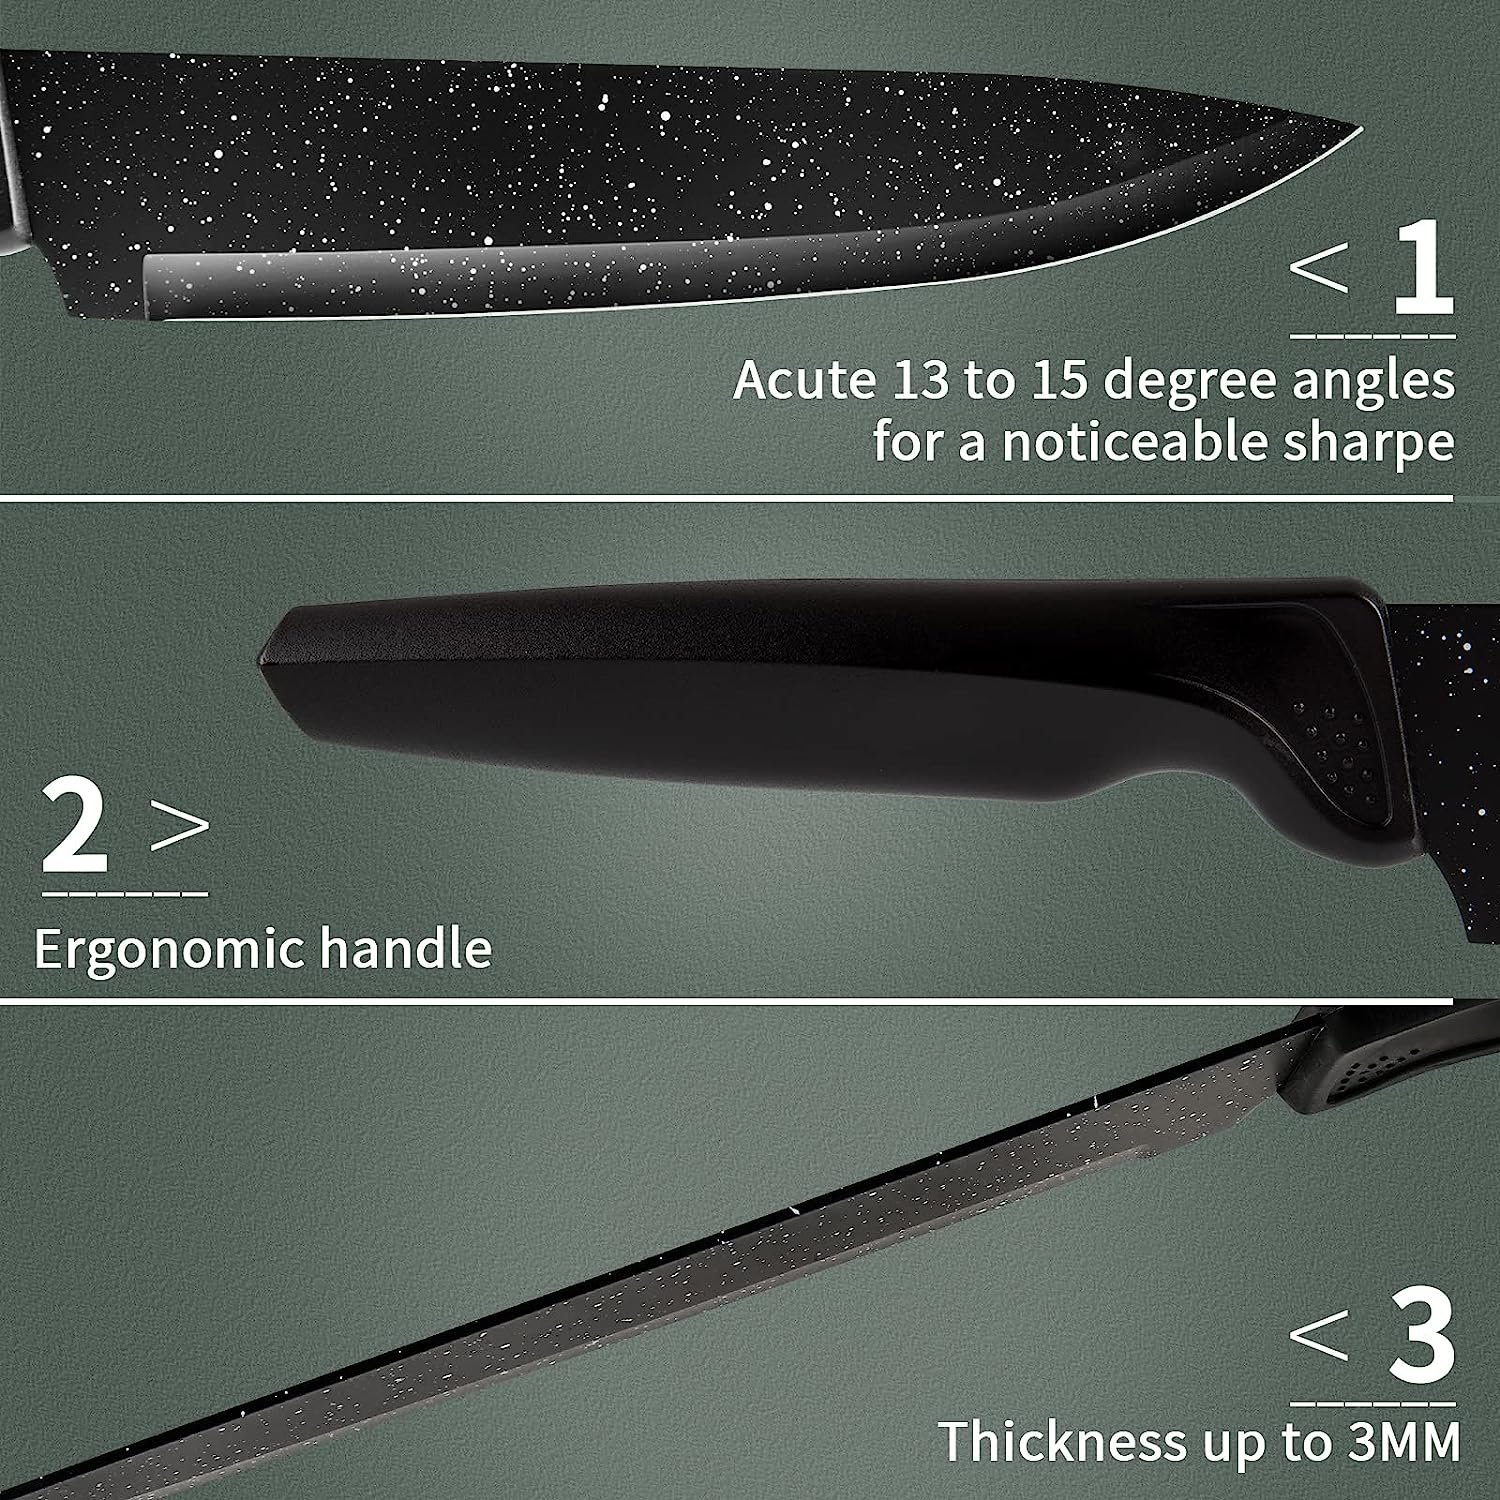 Royalty line 5pcs knife set non-stick coating - Arredamento e Casalinghi In  vendita a Roma